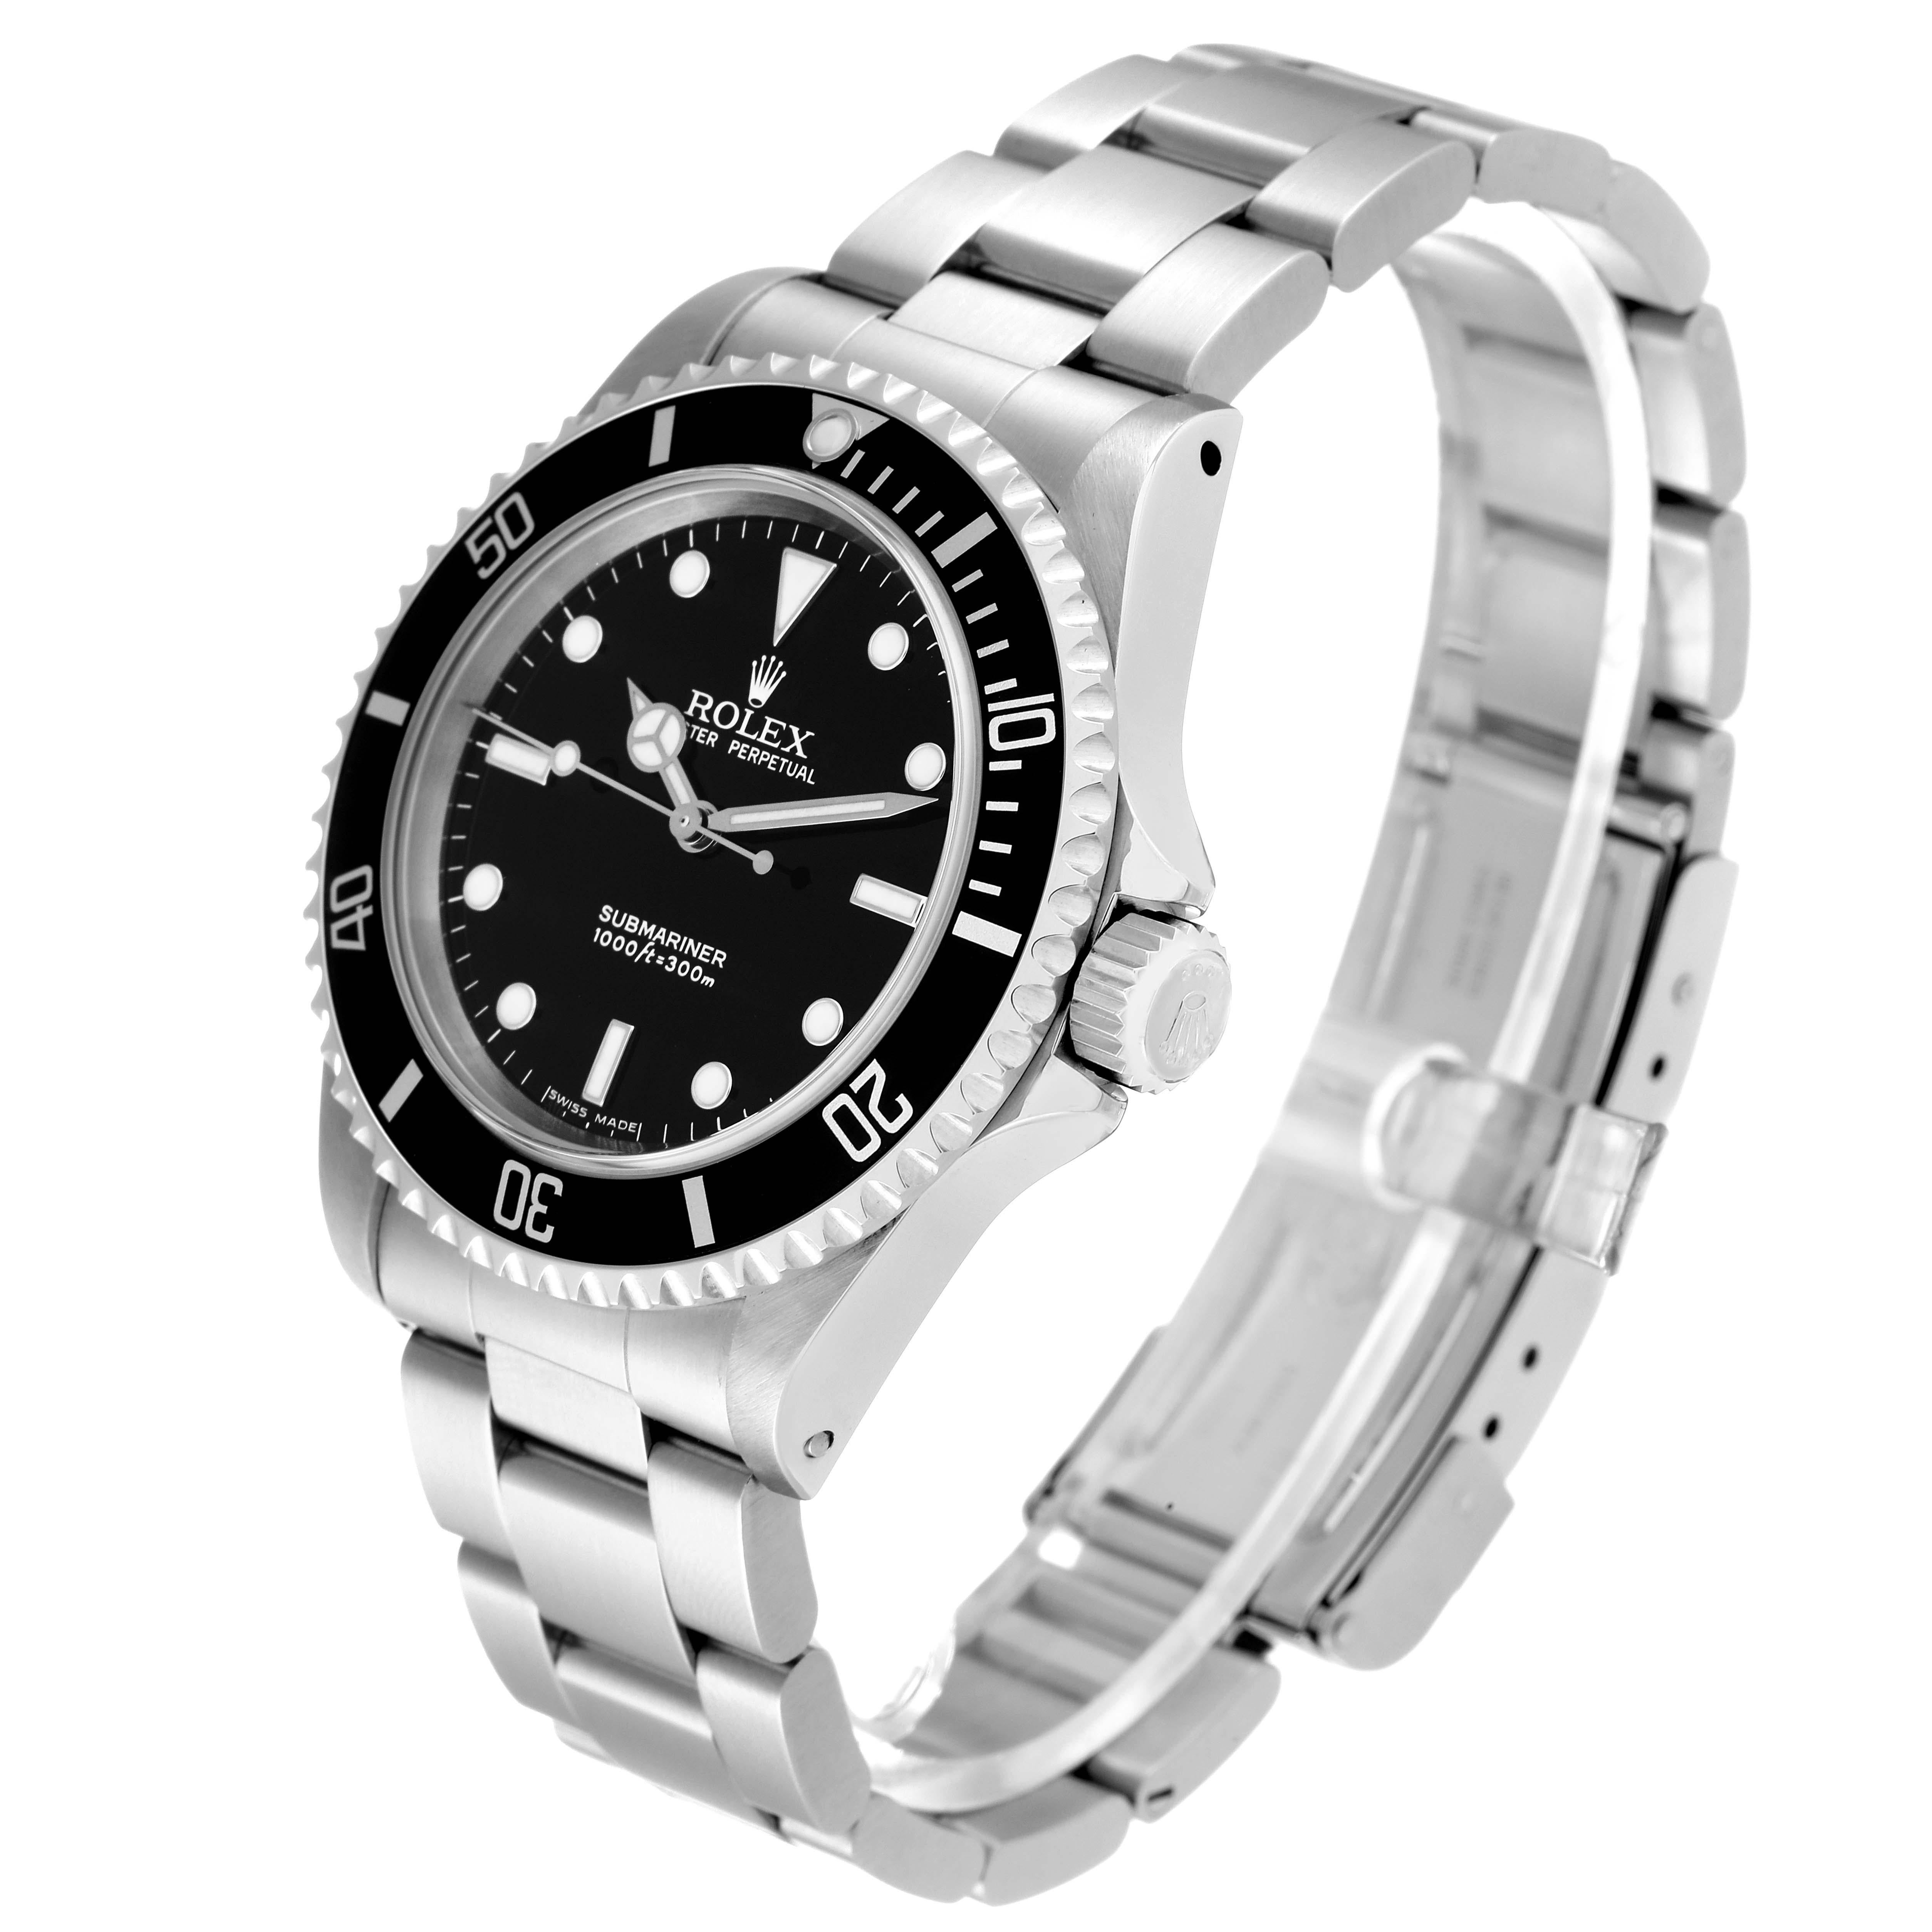 Men's Rolex Submariner No Date 40mm 2 Liner Steel Mens Watch 14060 Box Papers